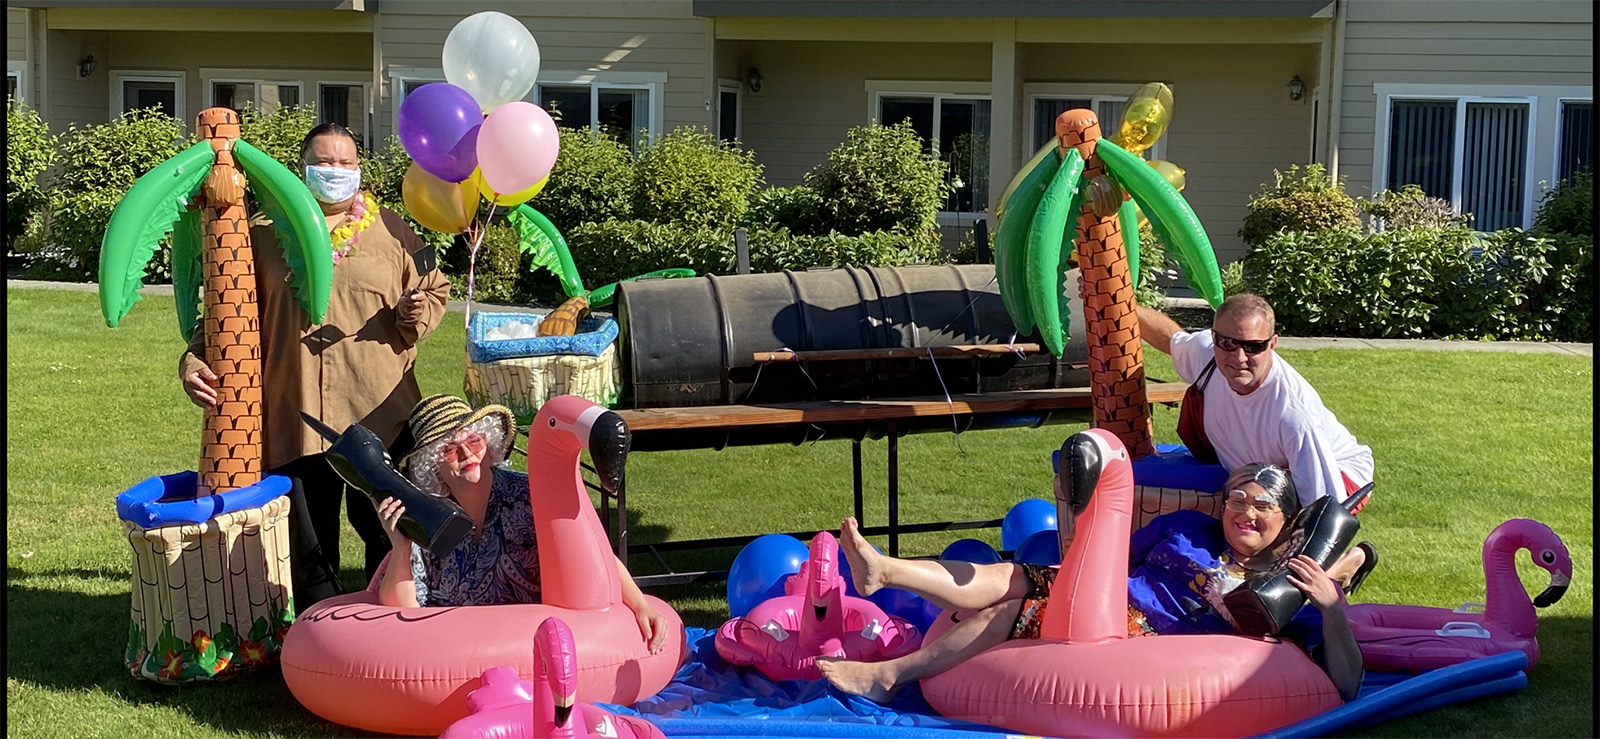 Residents' summer fun at Normandy Park